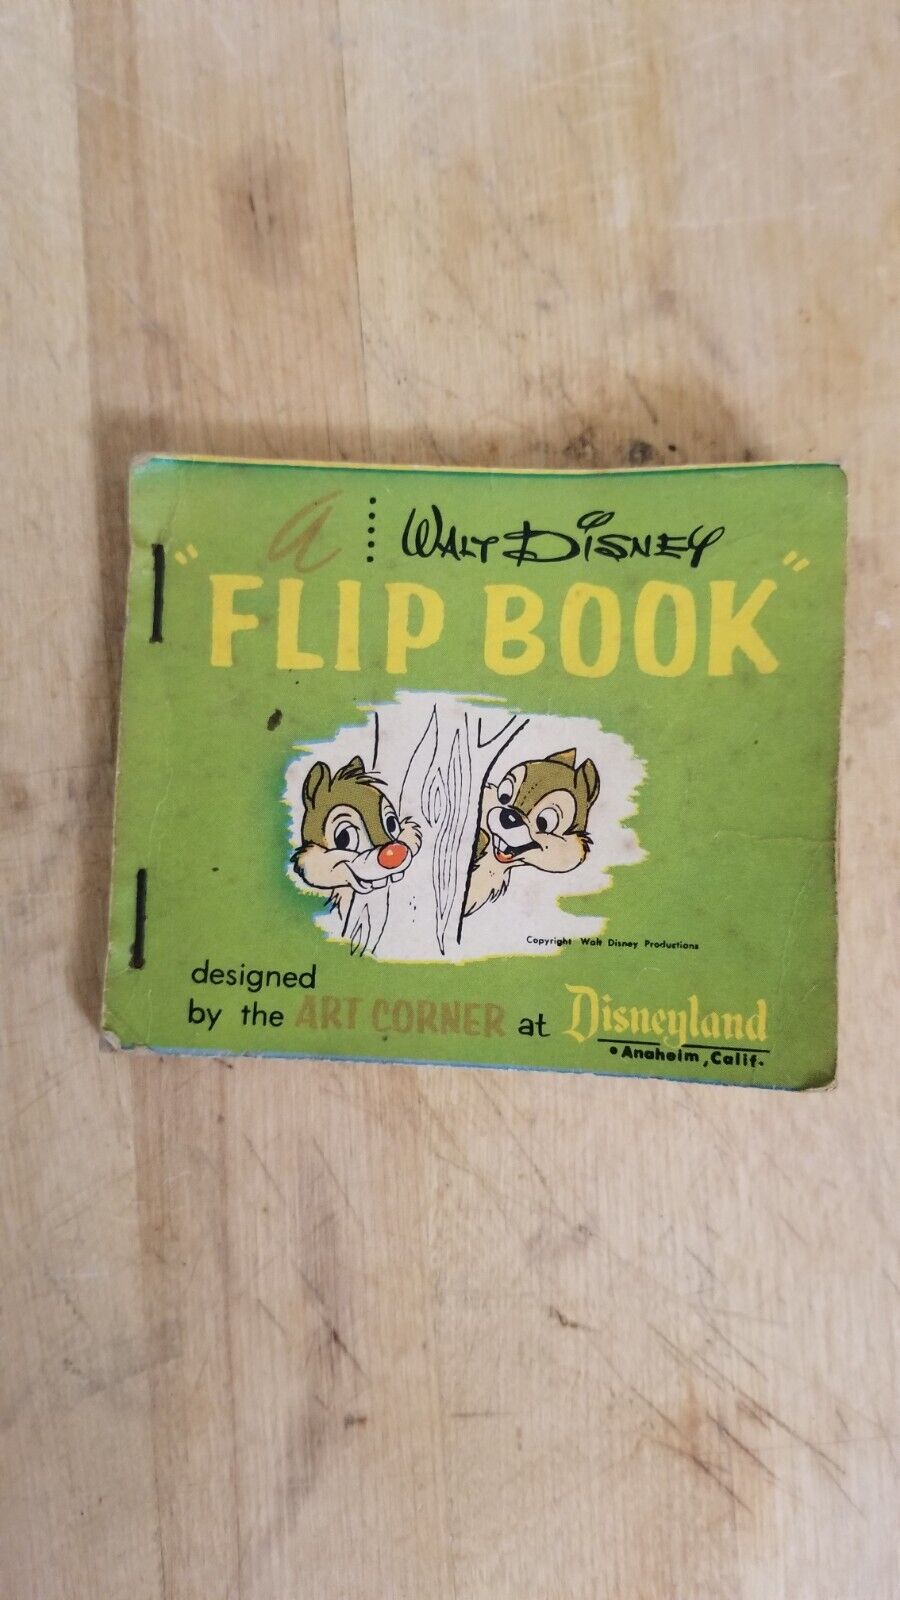 Vintage 1960’s Disneyland Disney Art Corner Chip n Dale Chipmunks Flip Book